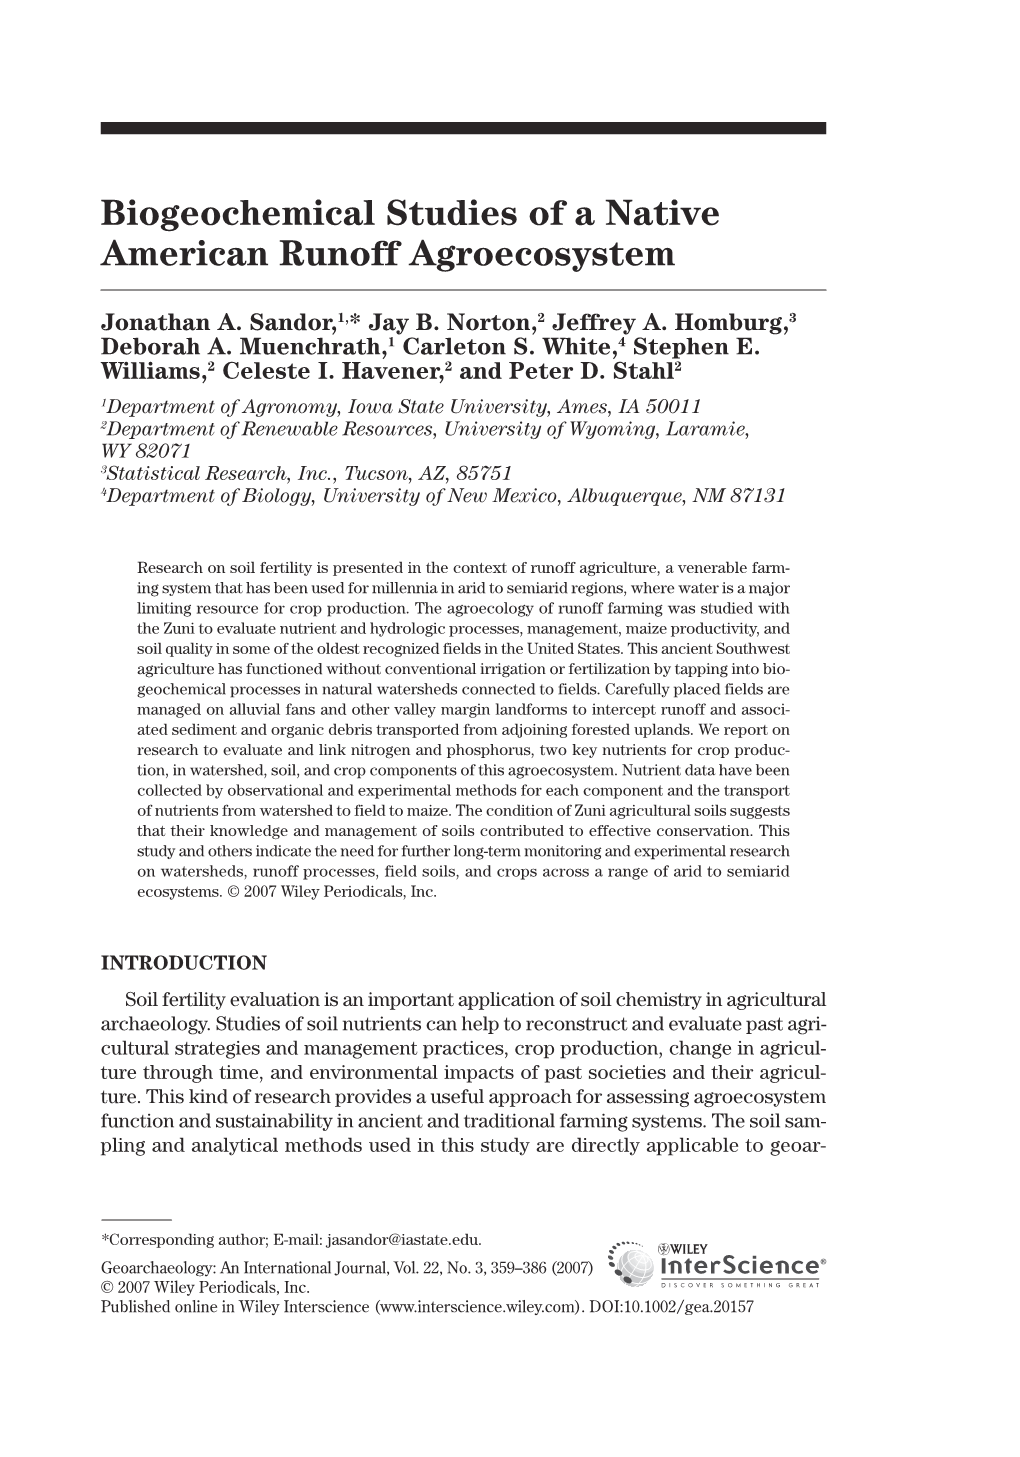 Biogeochemical Studies of a Native American Runoff Agroecosystem